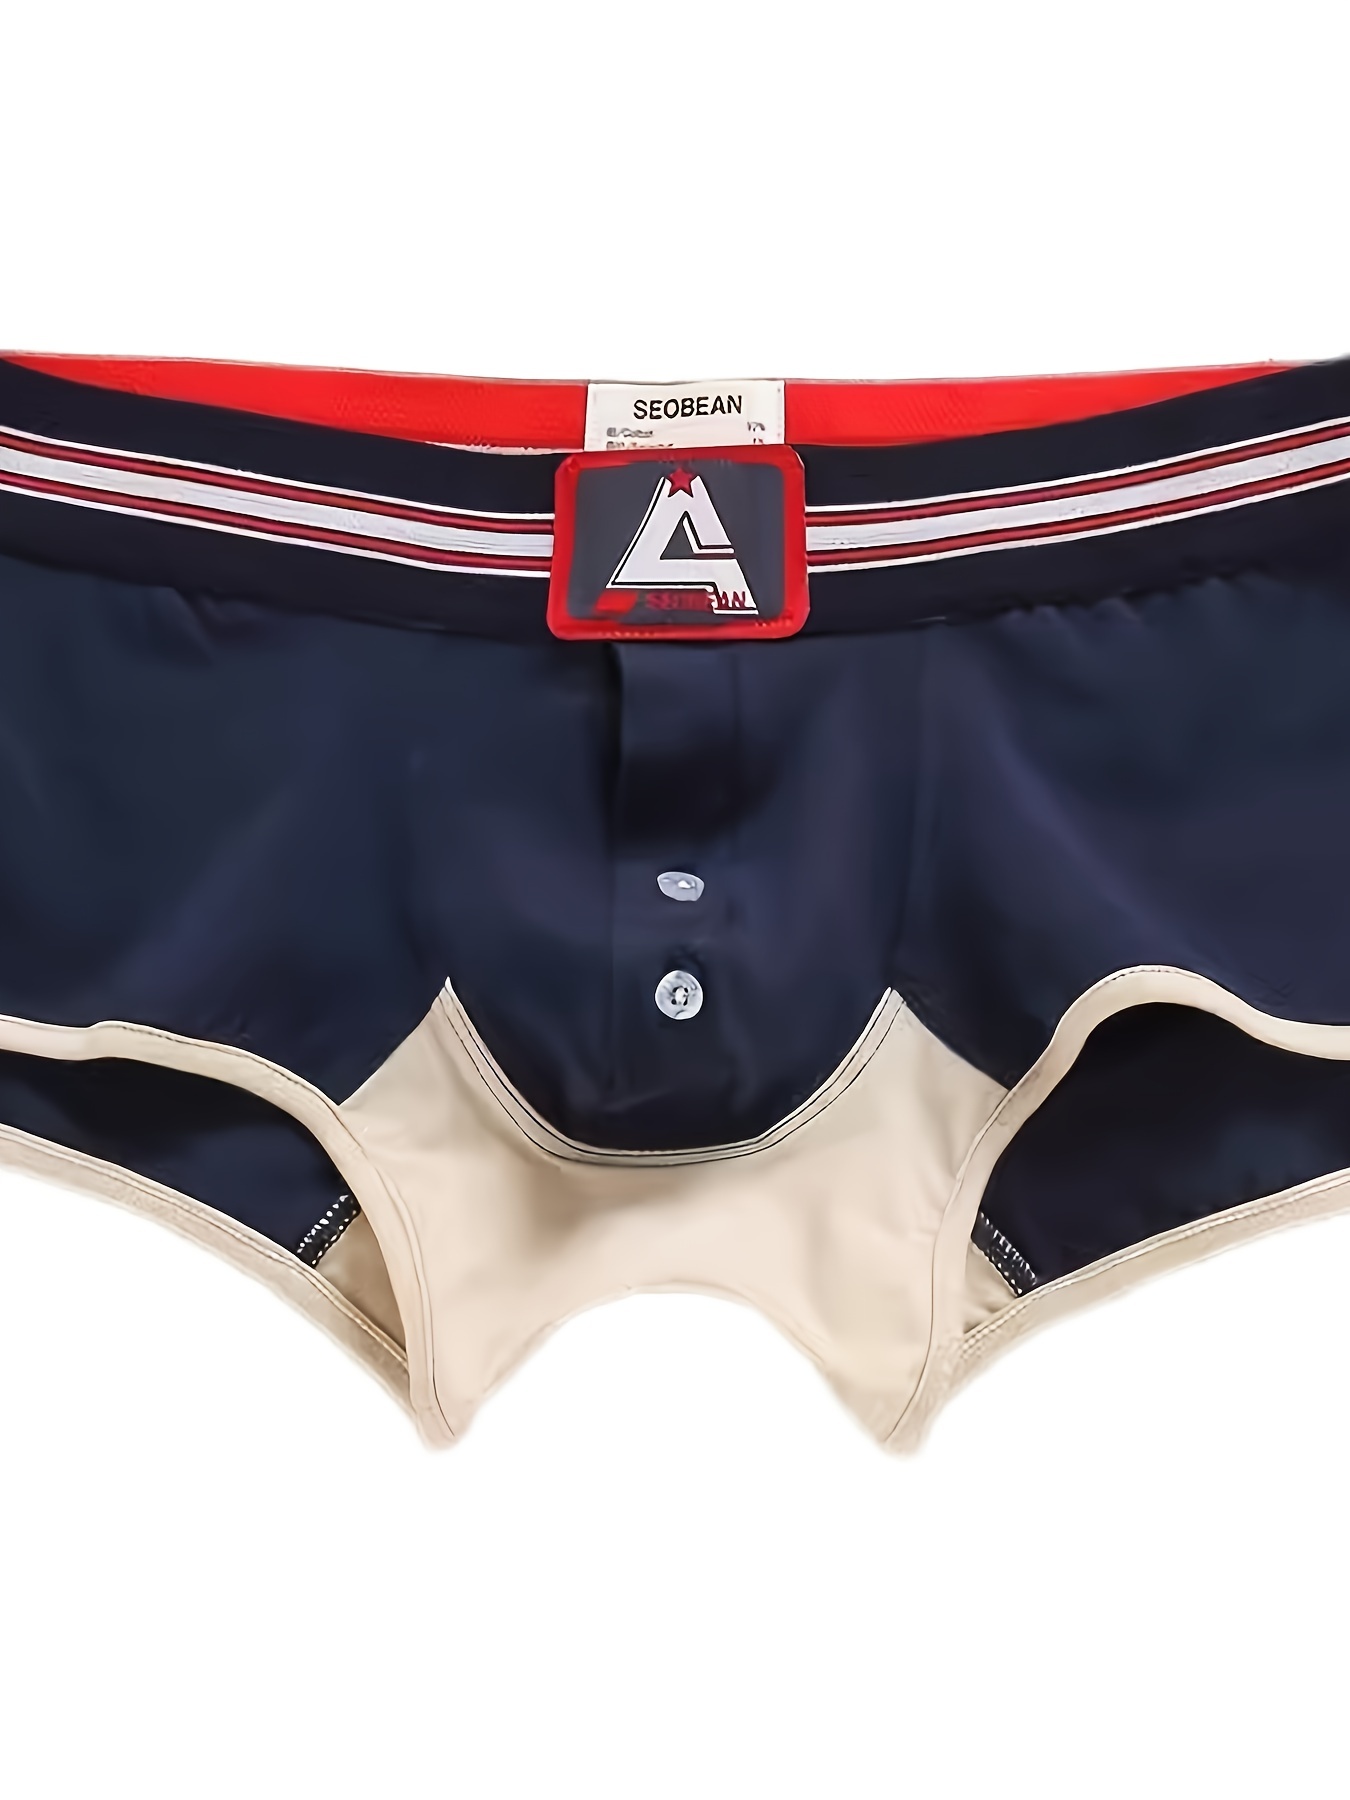 Men's underwear cotton sexy front convex men's briefs comfortable